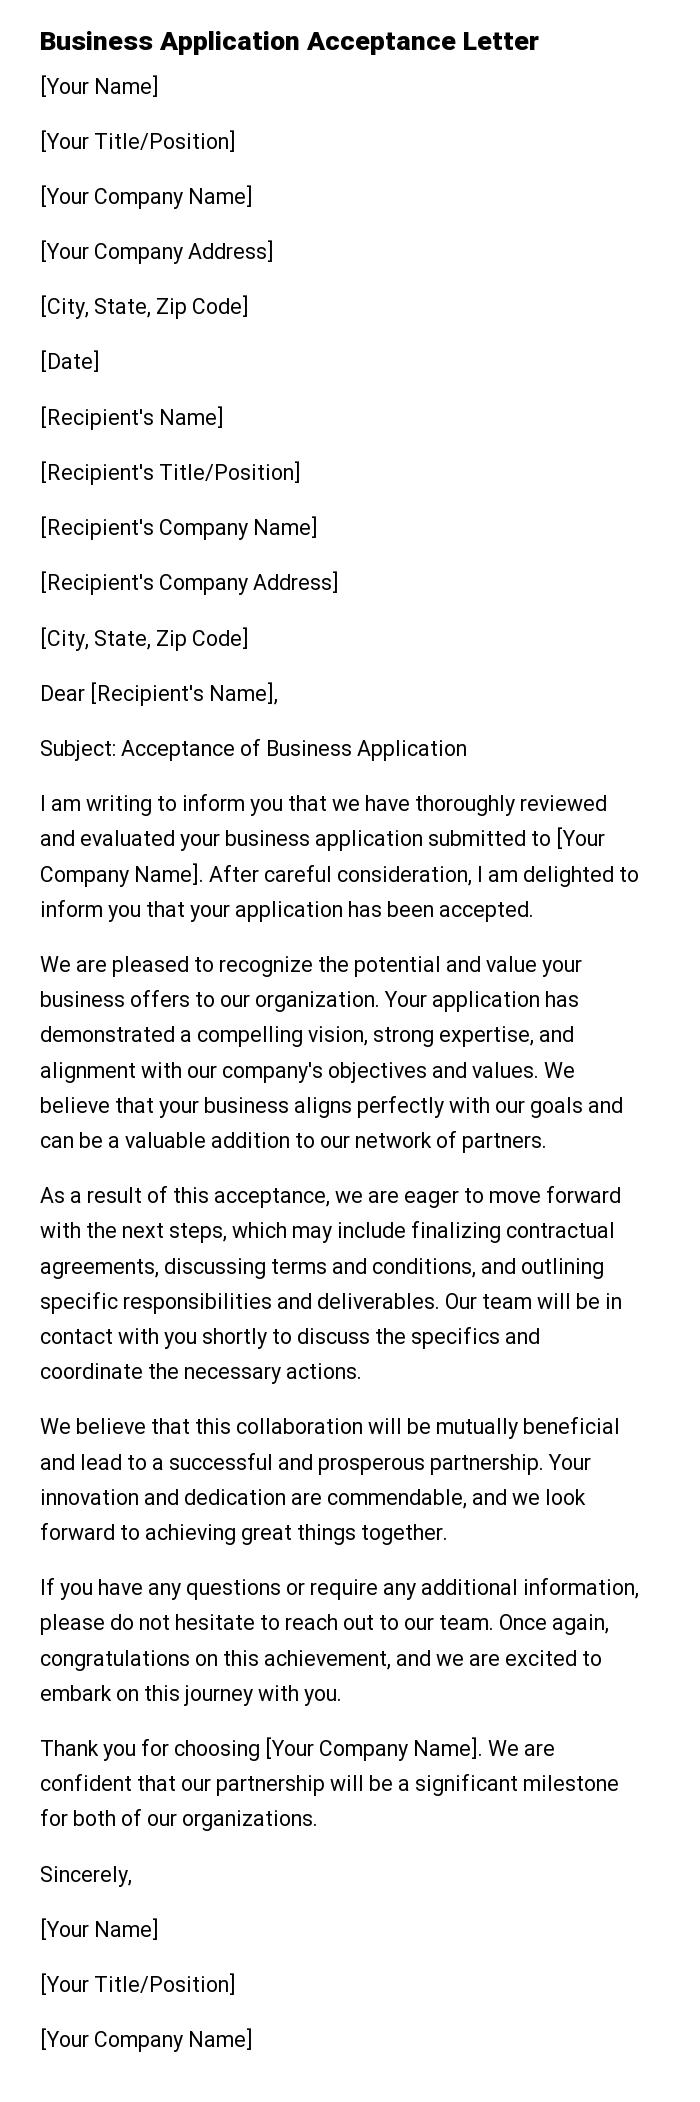 Business Application Acceptance Letter